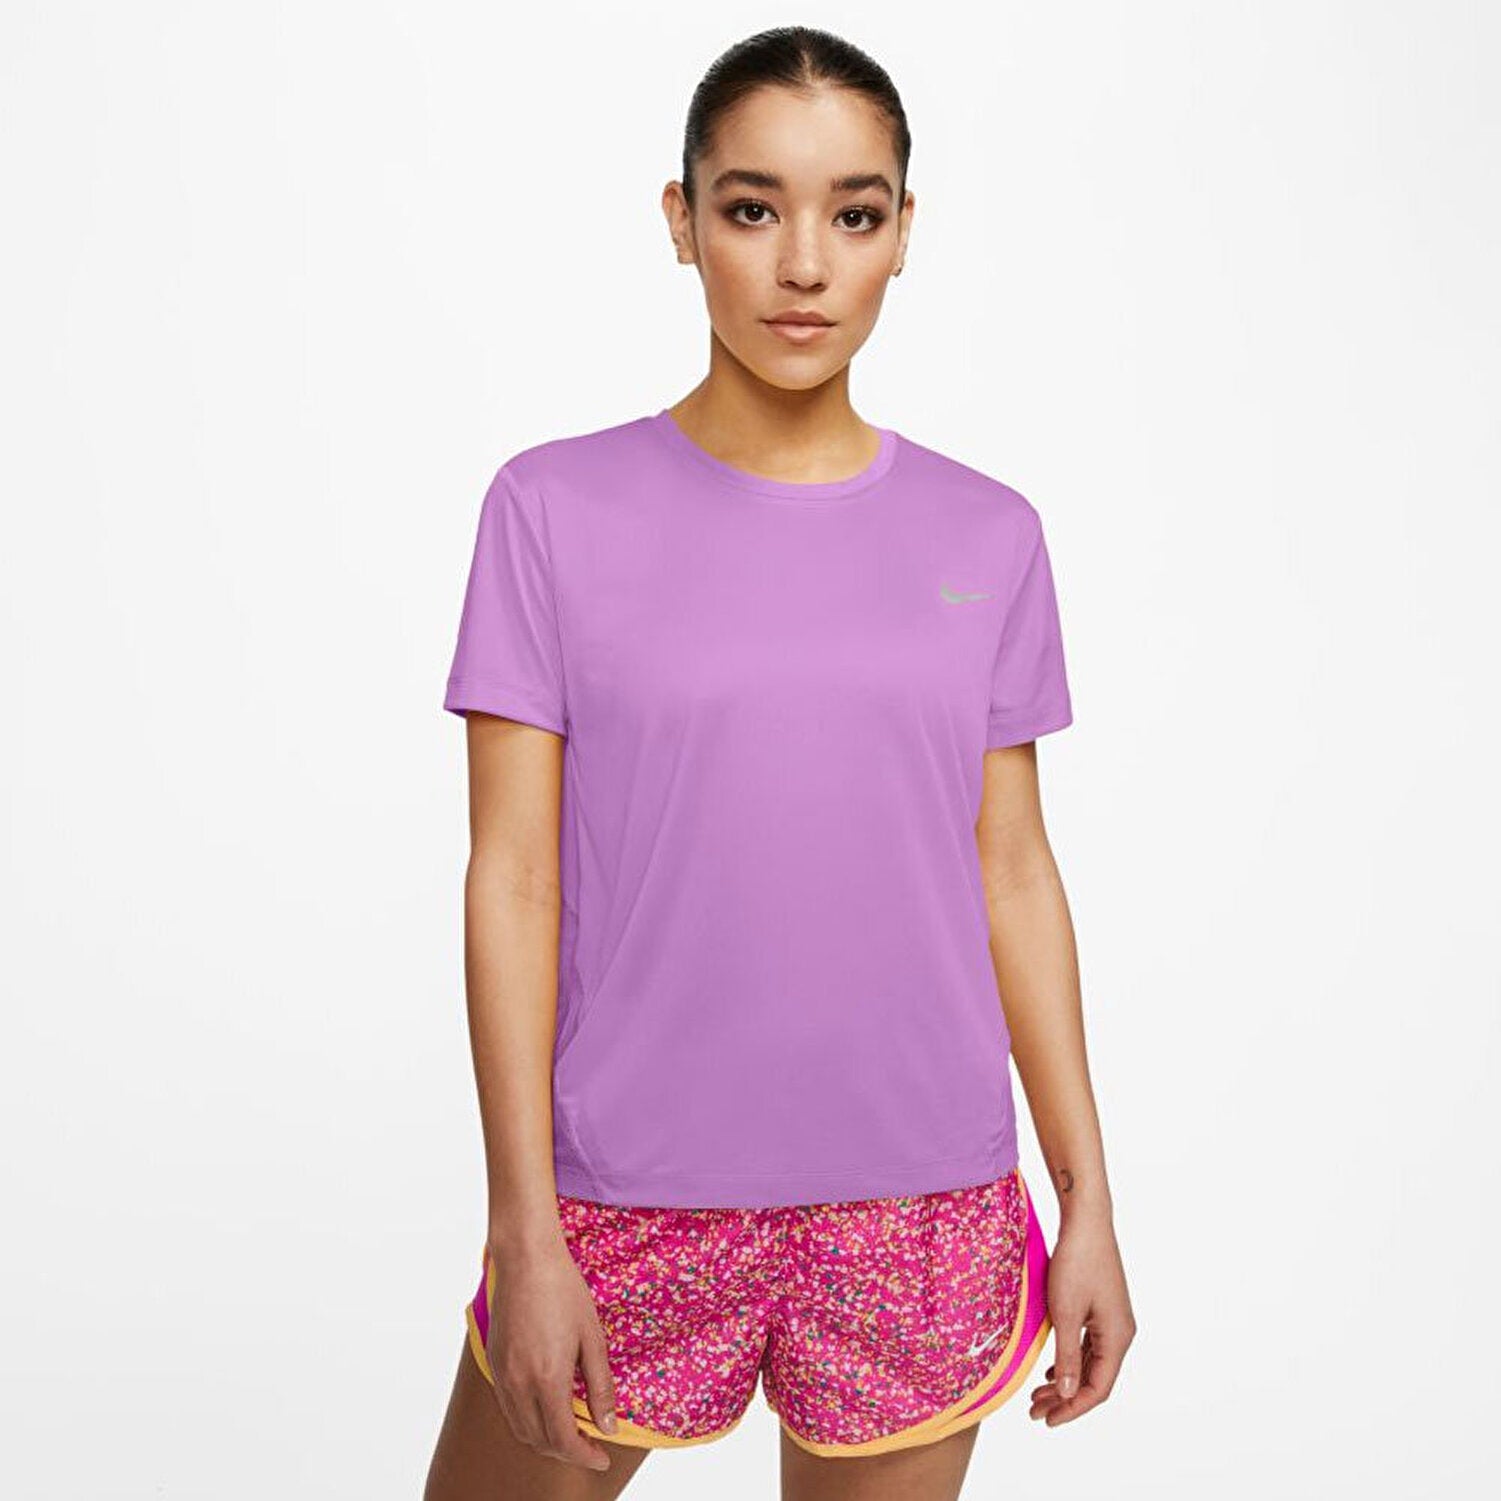 Nike Miler dry-fit t-shirt women